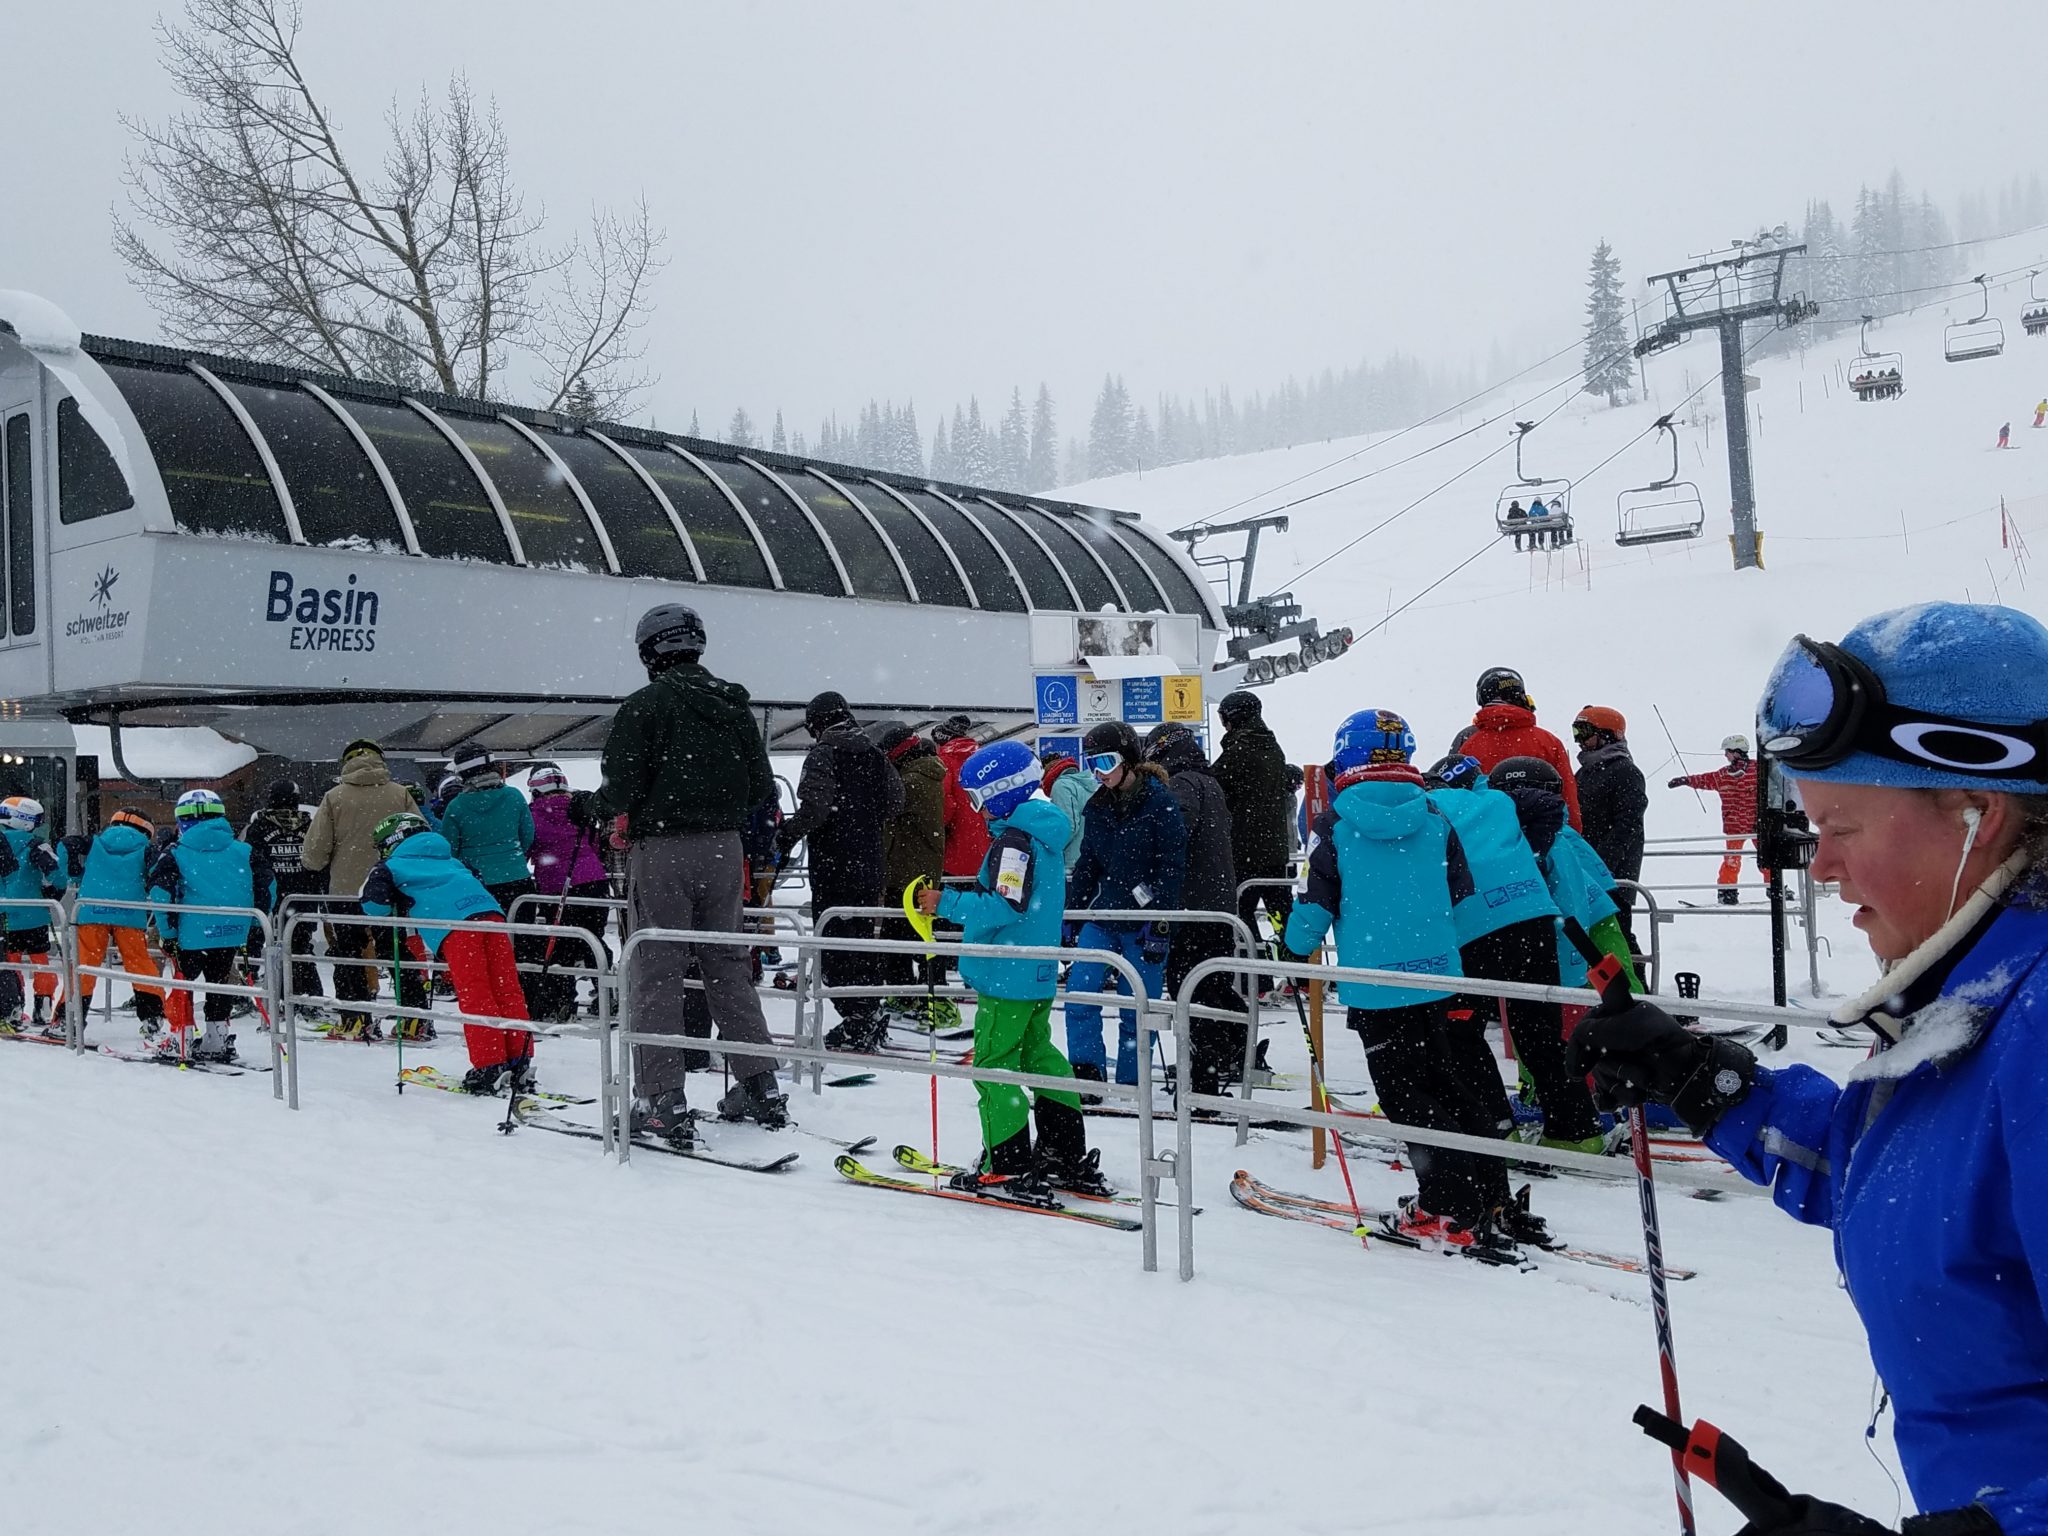 schweitzer ski lift